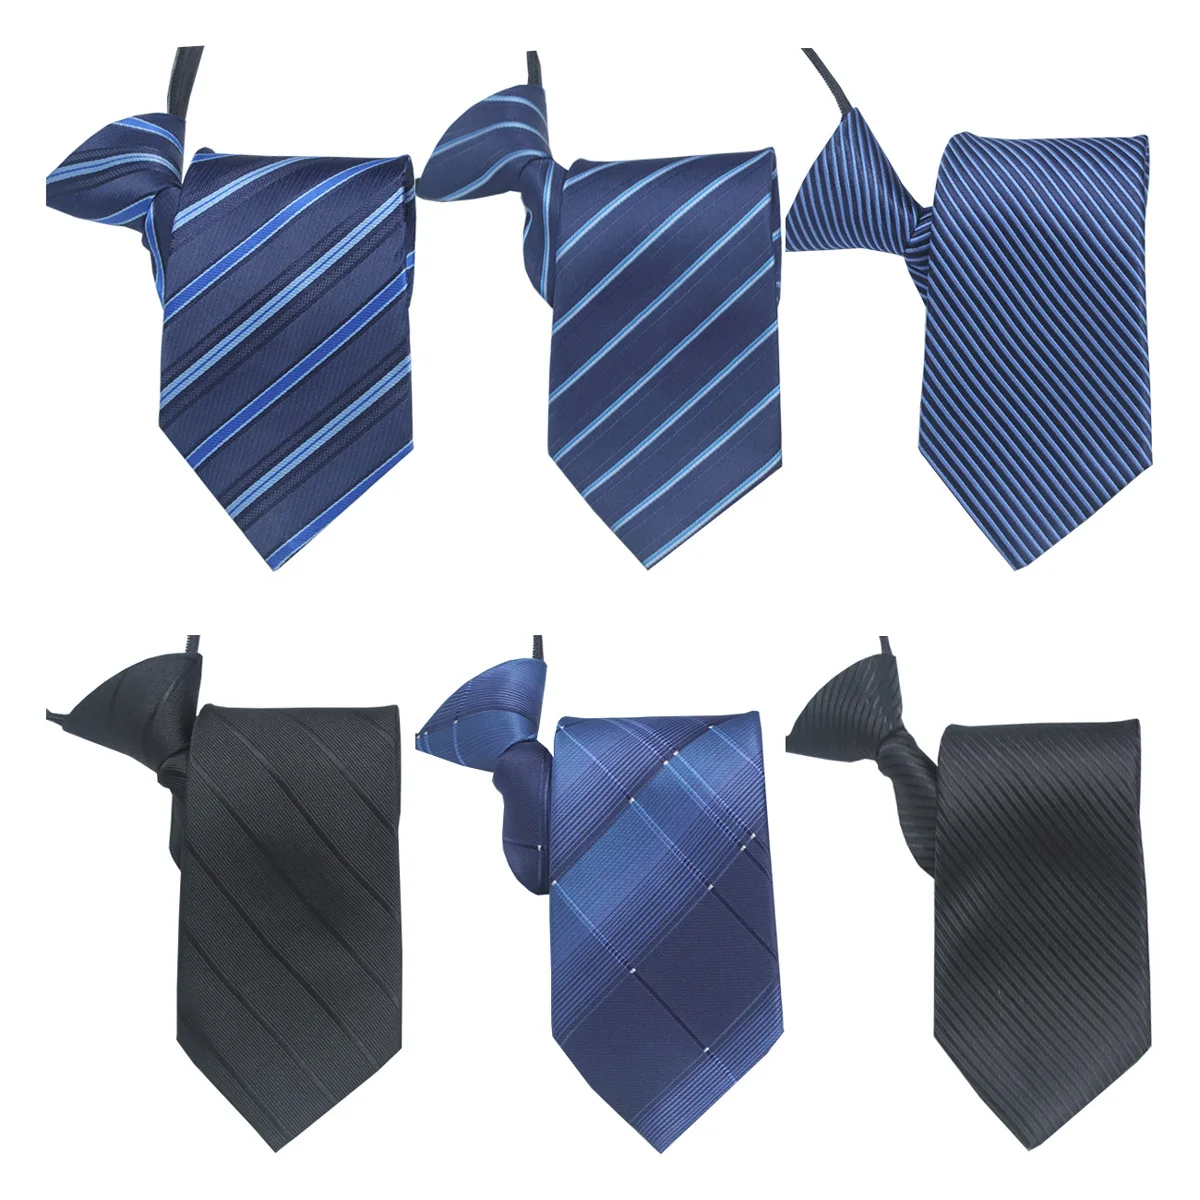 

Classic 8cm Ties for Man 100% Silk Tie Luxury Striped Plaid Checks Business Neck Tie for Men Suit Cravat Wedding Party Neckties